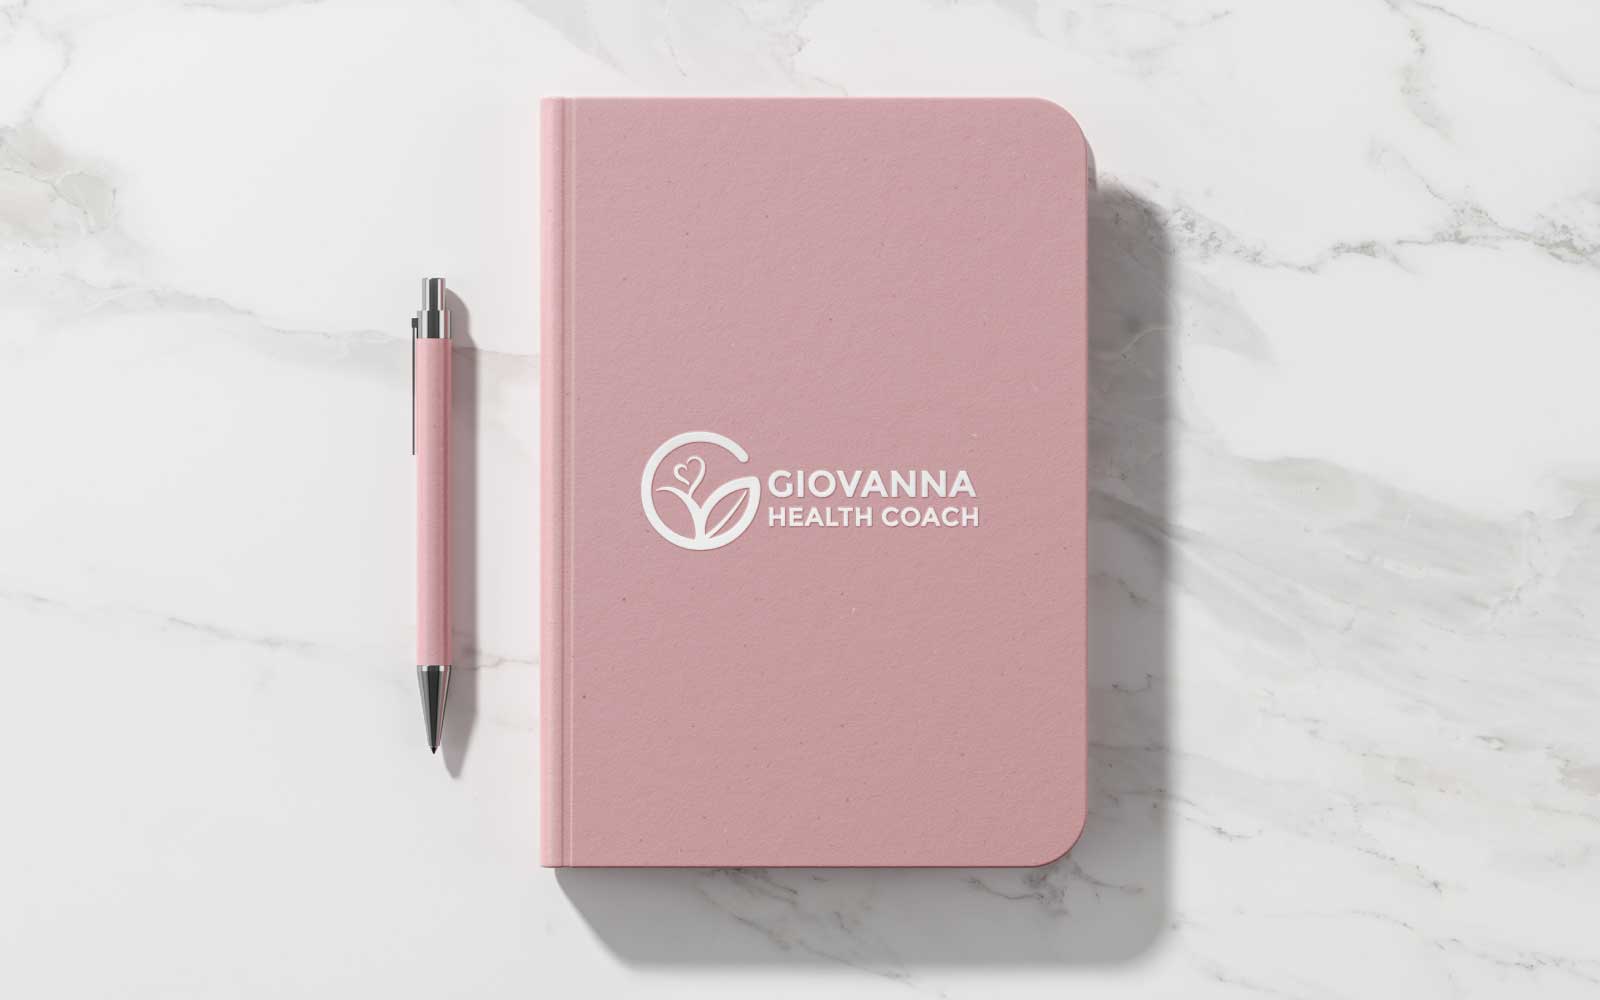 Giovanna - Creación de logo - Diseño de papelería - Diseño de Manual corporativo